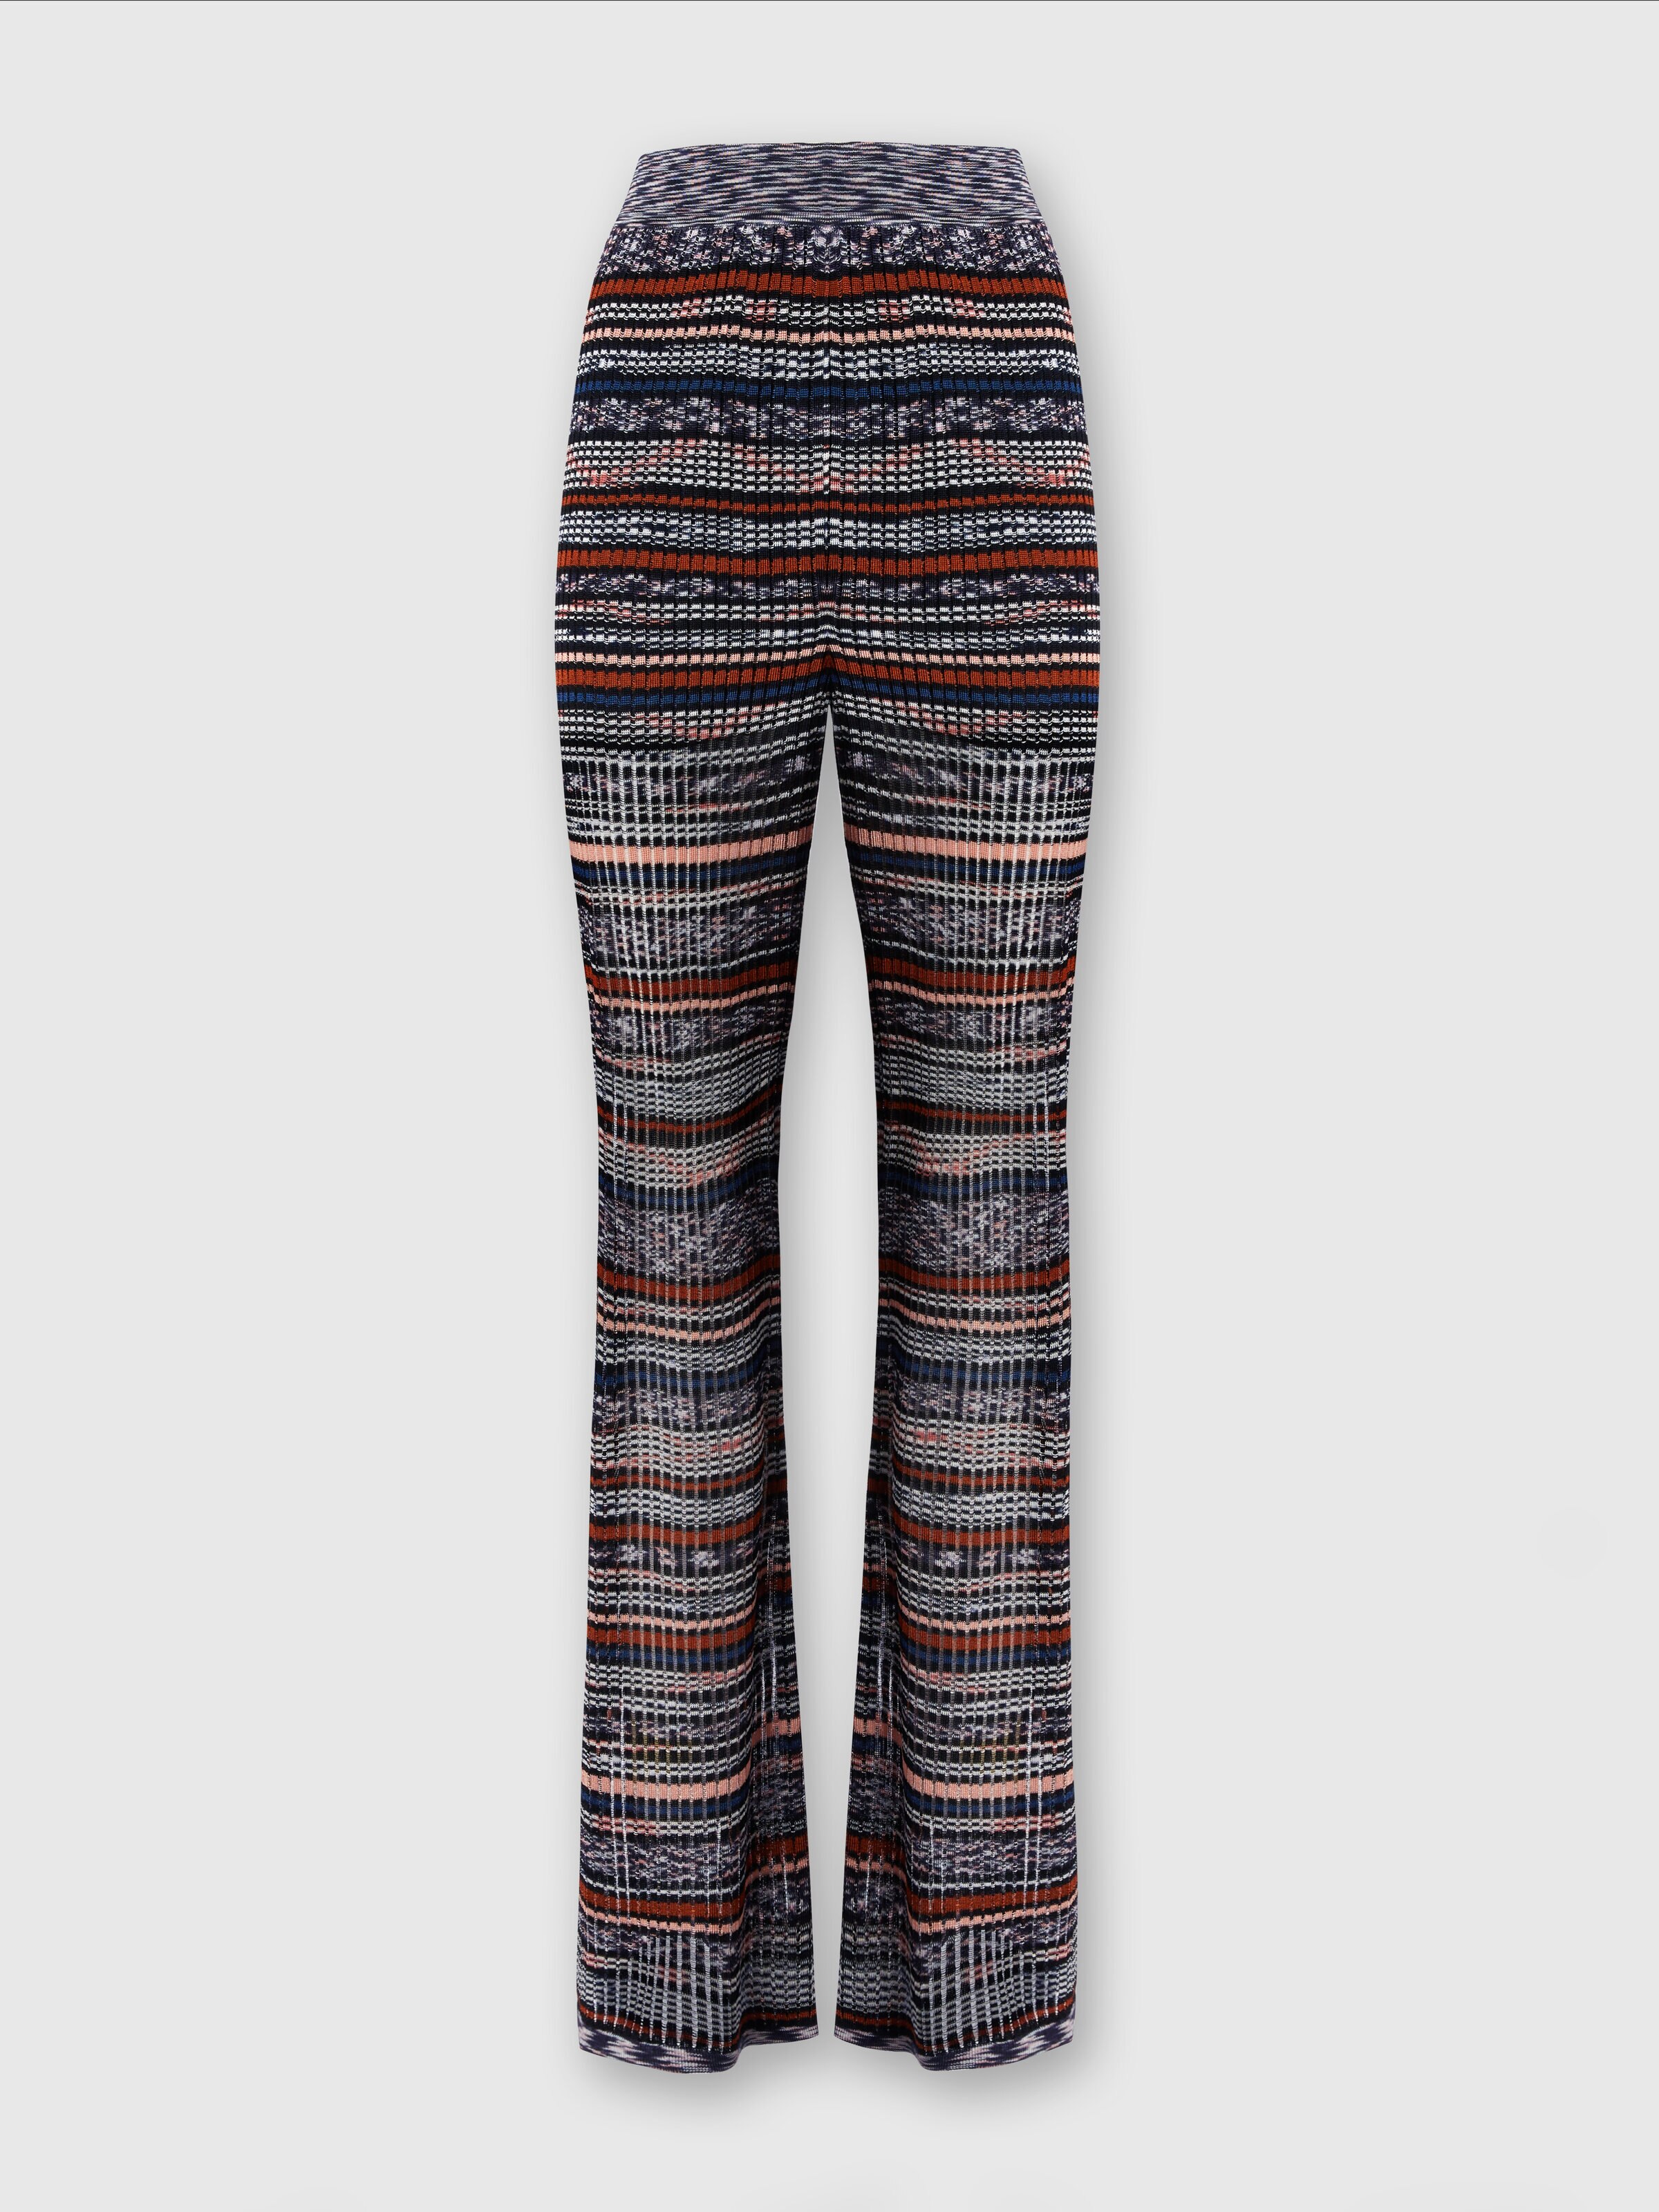 Ribbed trousers in slub viscose knit, Multicoloured  - 0